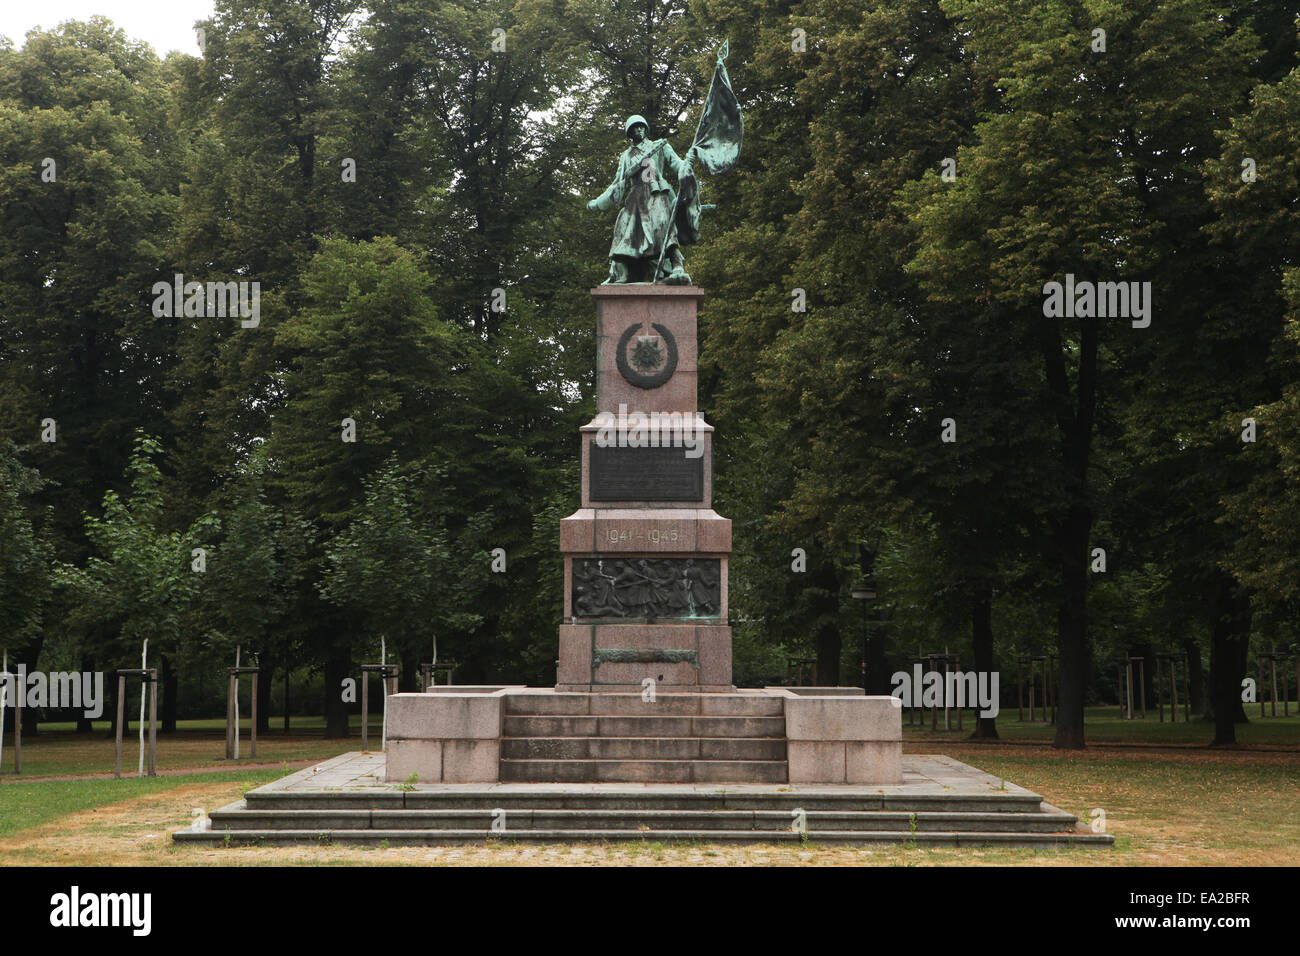 Memorial to Soviet soldiers fallen in World War II by German sculptor Otto Rost at Olbrichtplatz in Dresden, Saxony, Germany. Stock Photo